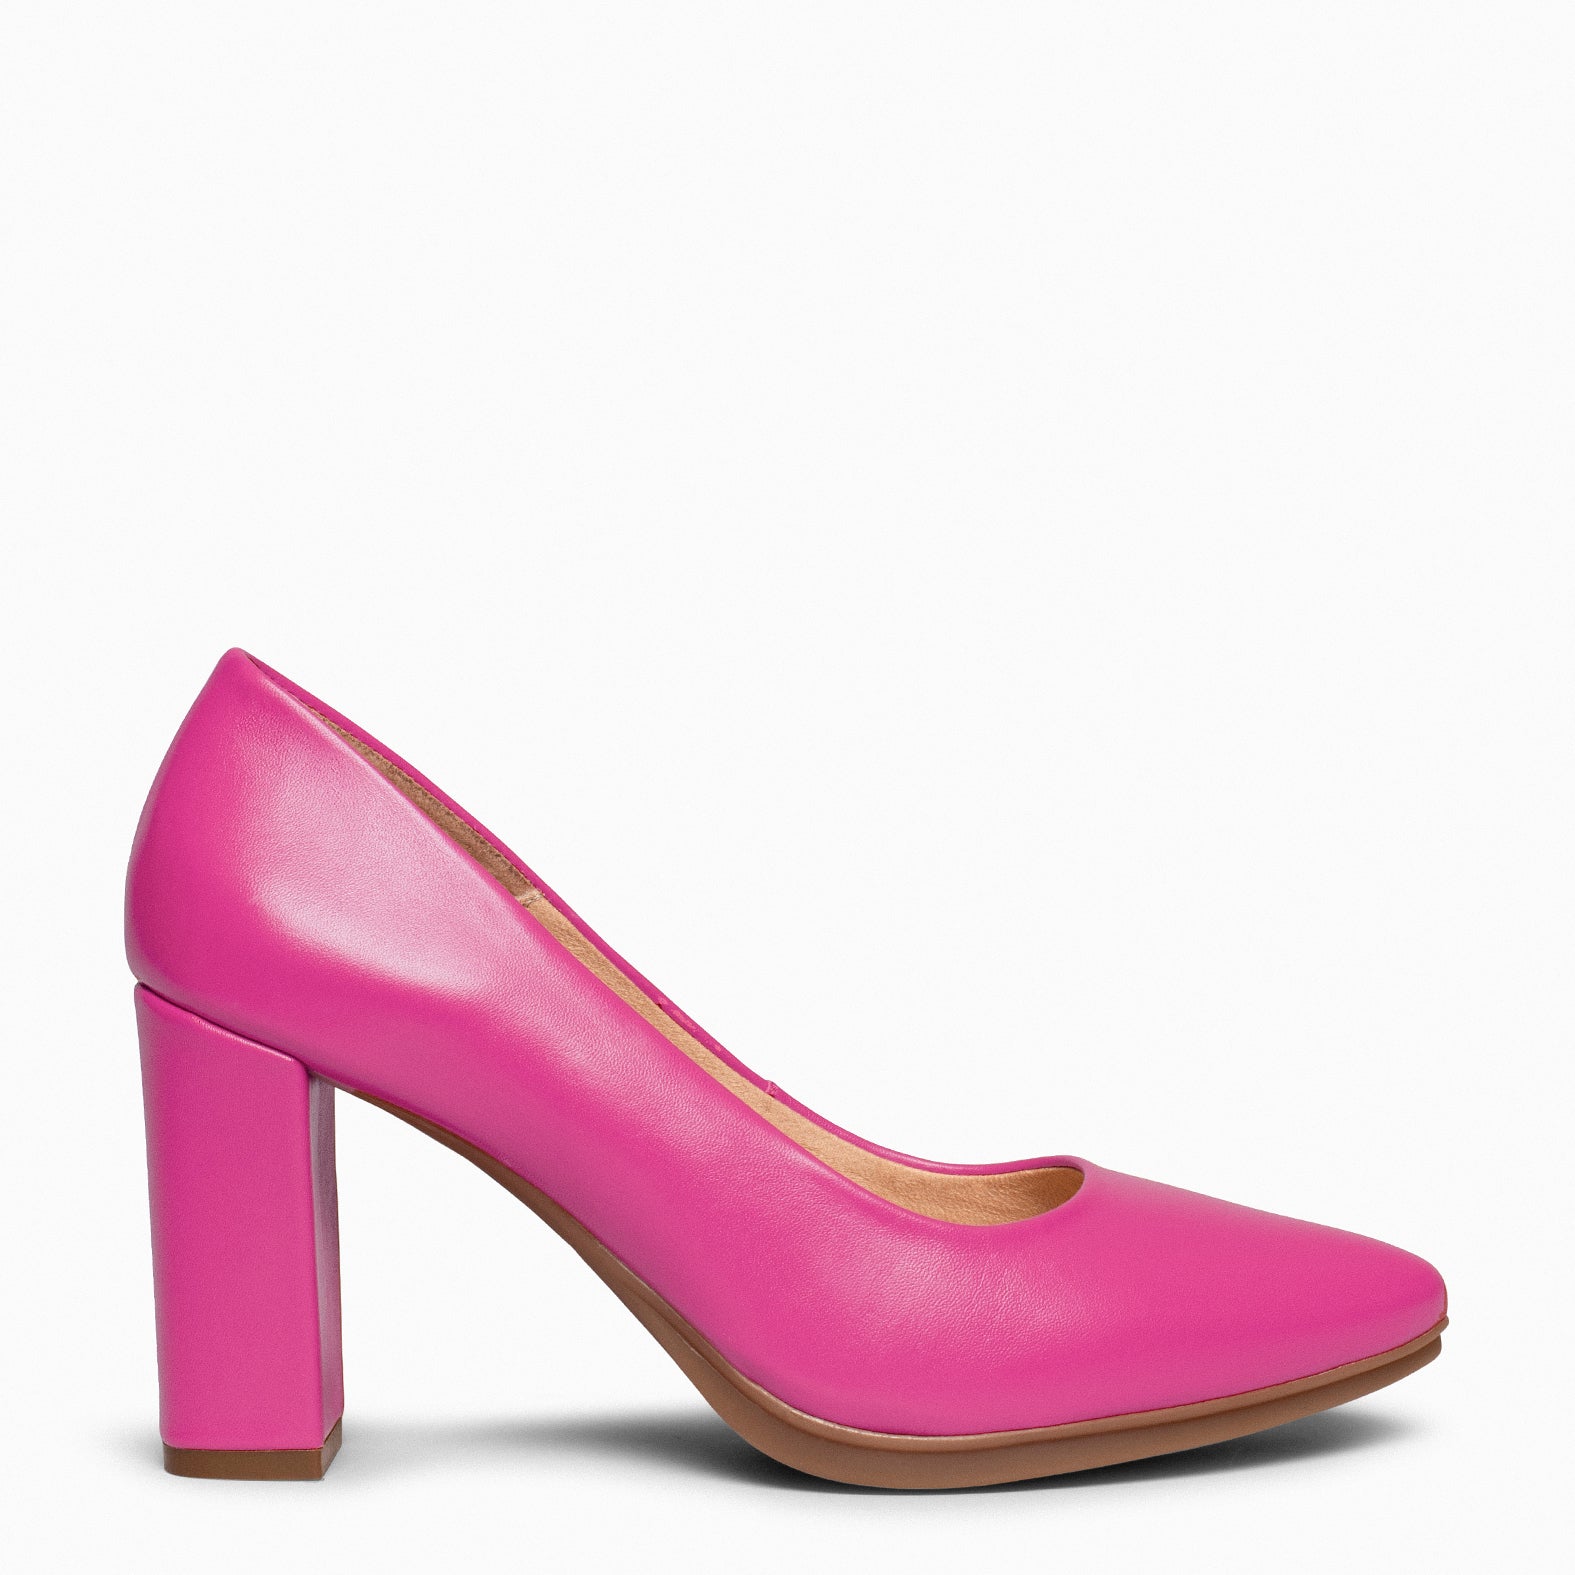 URBAN SALON – FUCHSIA nappa leather high heel